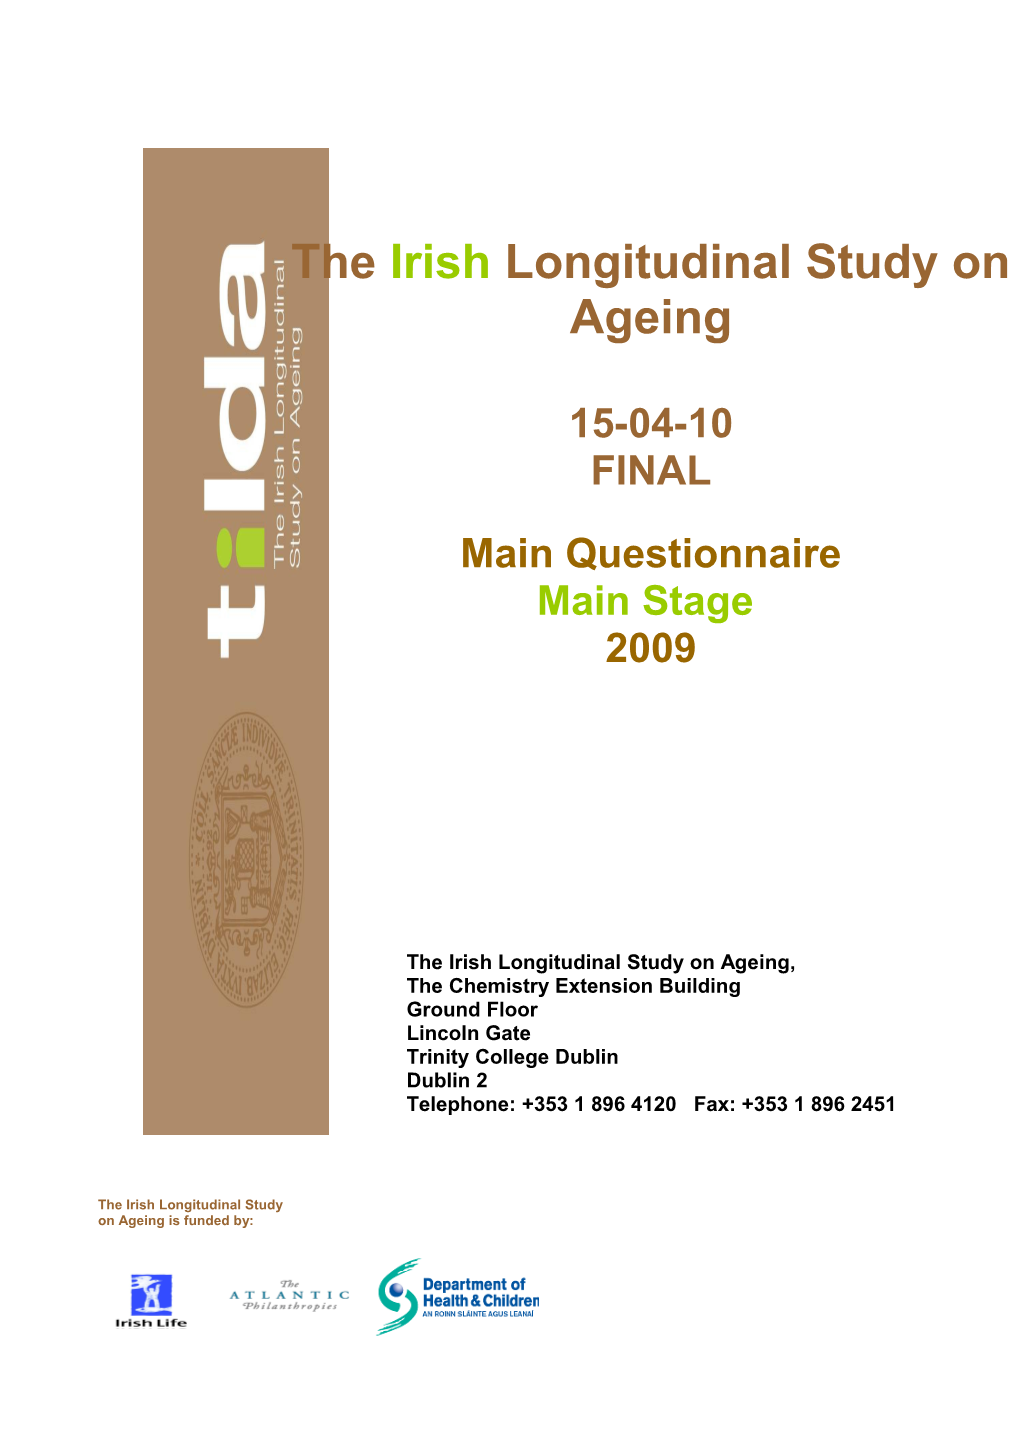 The Irish Longitudinal Study on Ageing (TILDA)